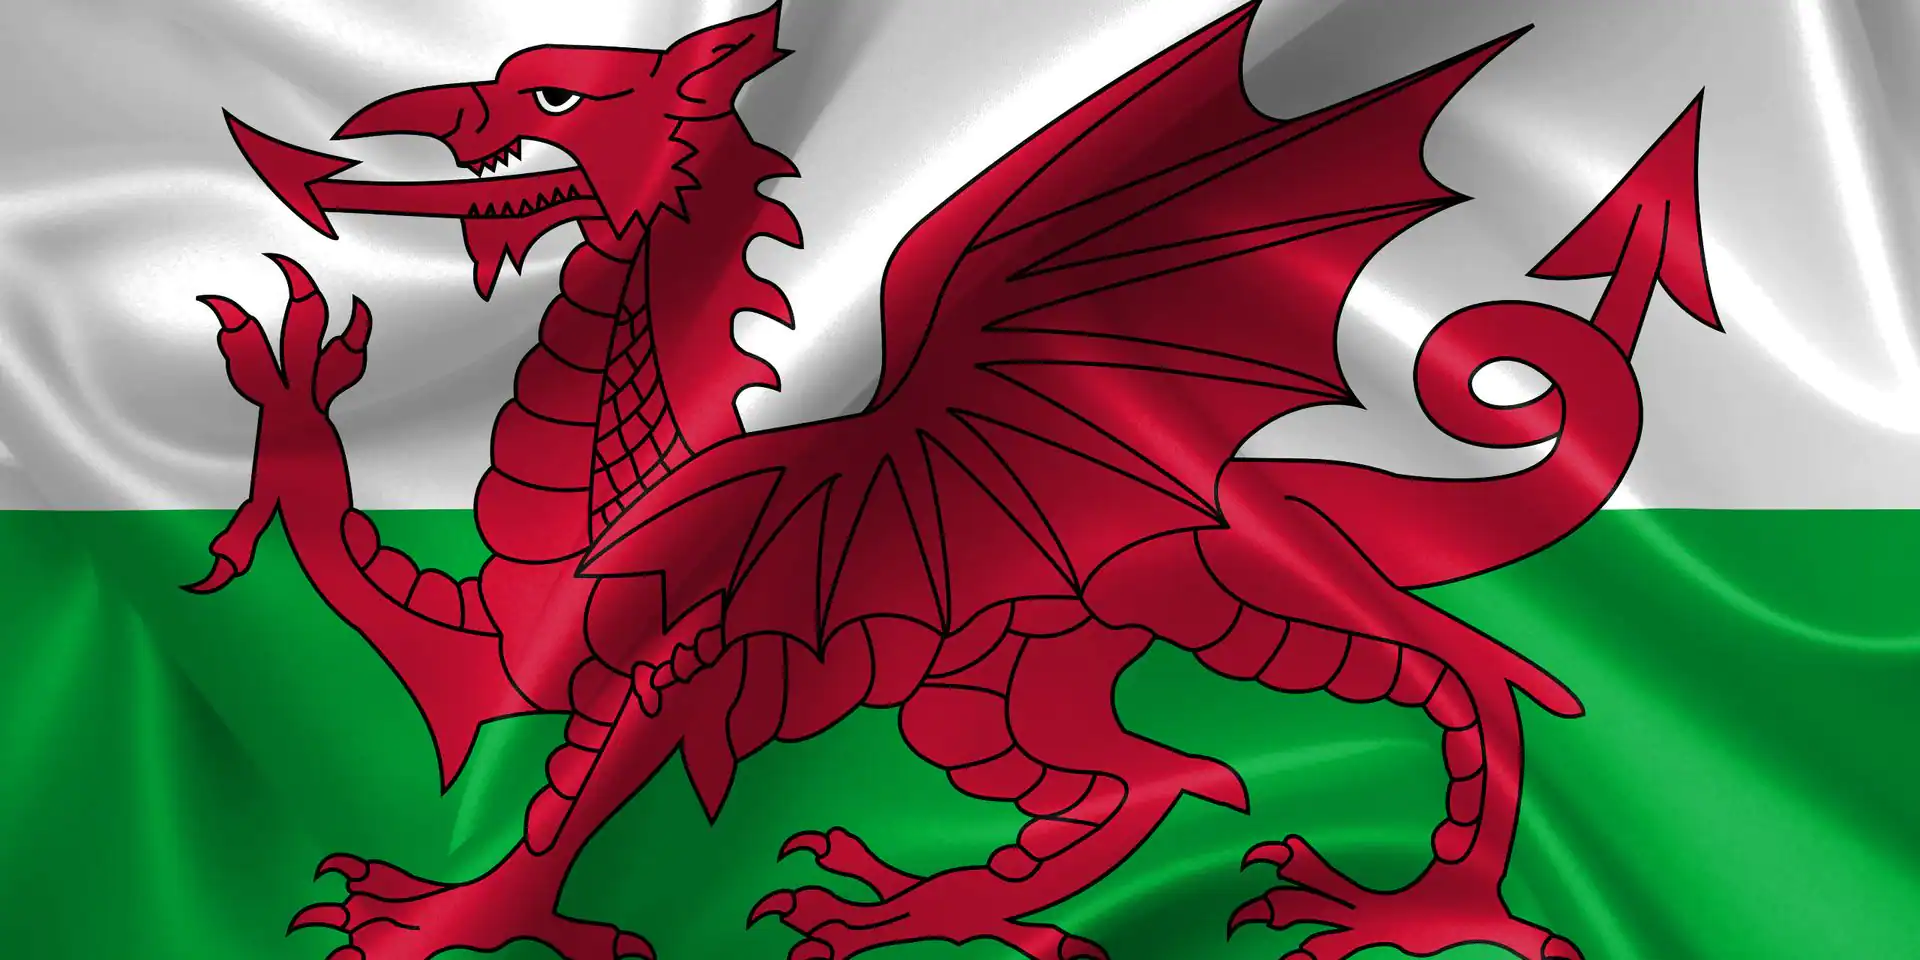 Wales-Flagge